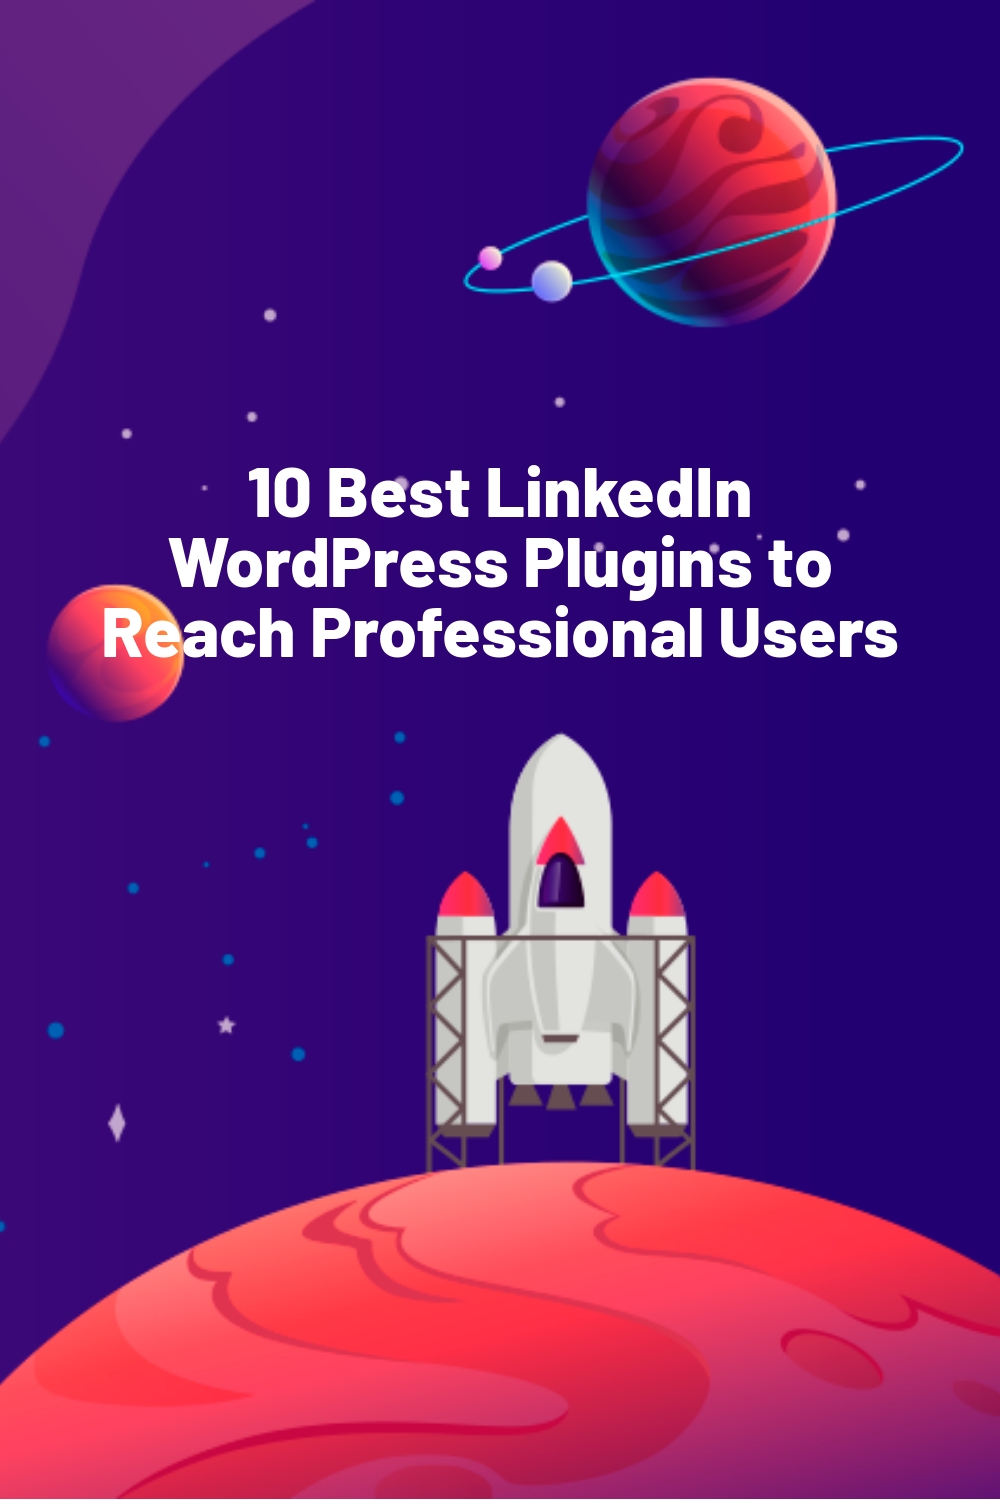 10 Best LinkedIn WordPress Plugins to Reach Professional Users